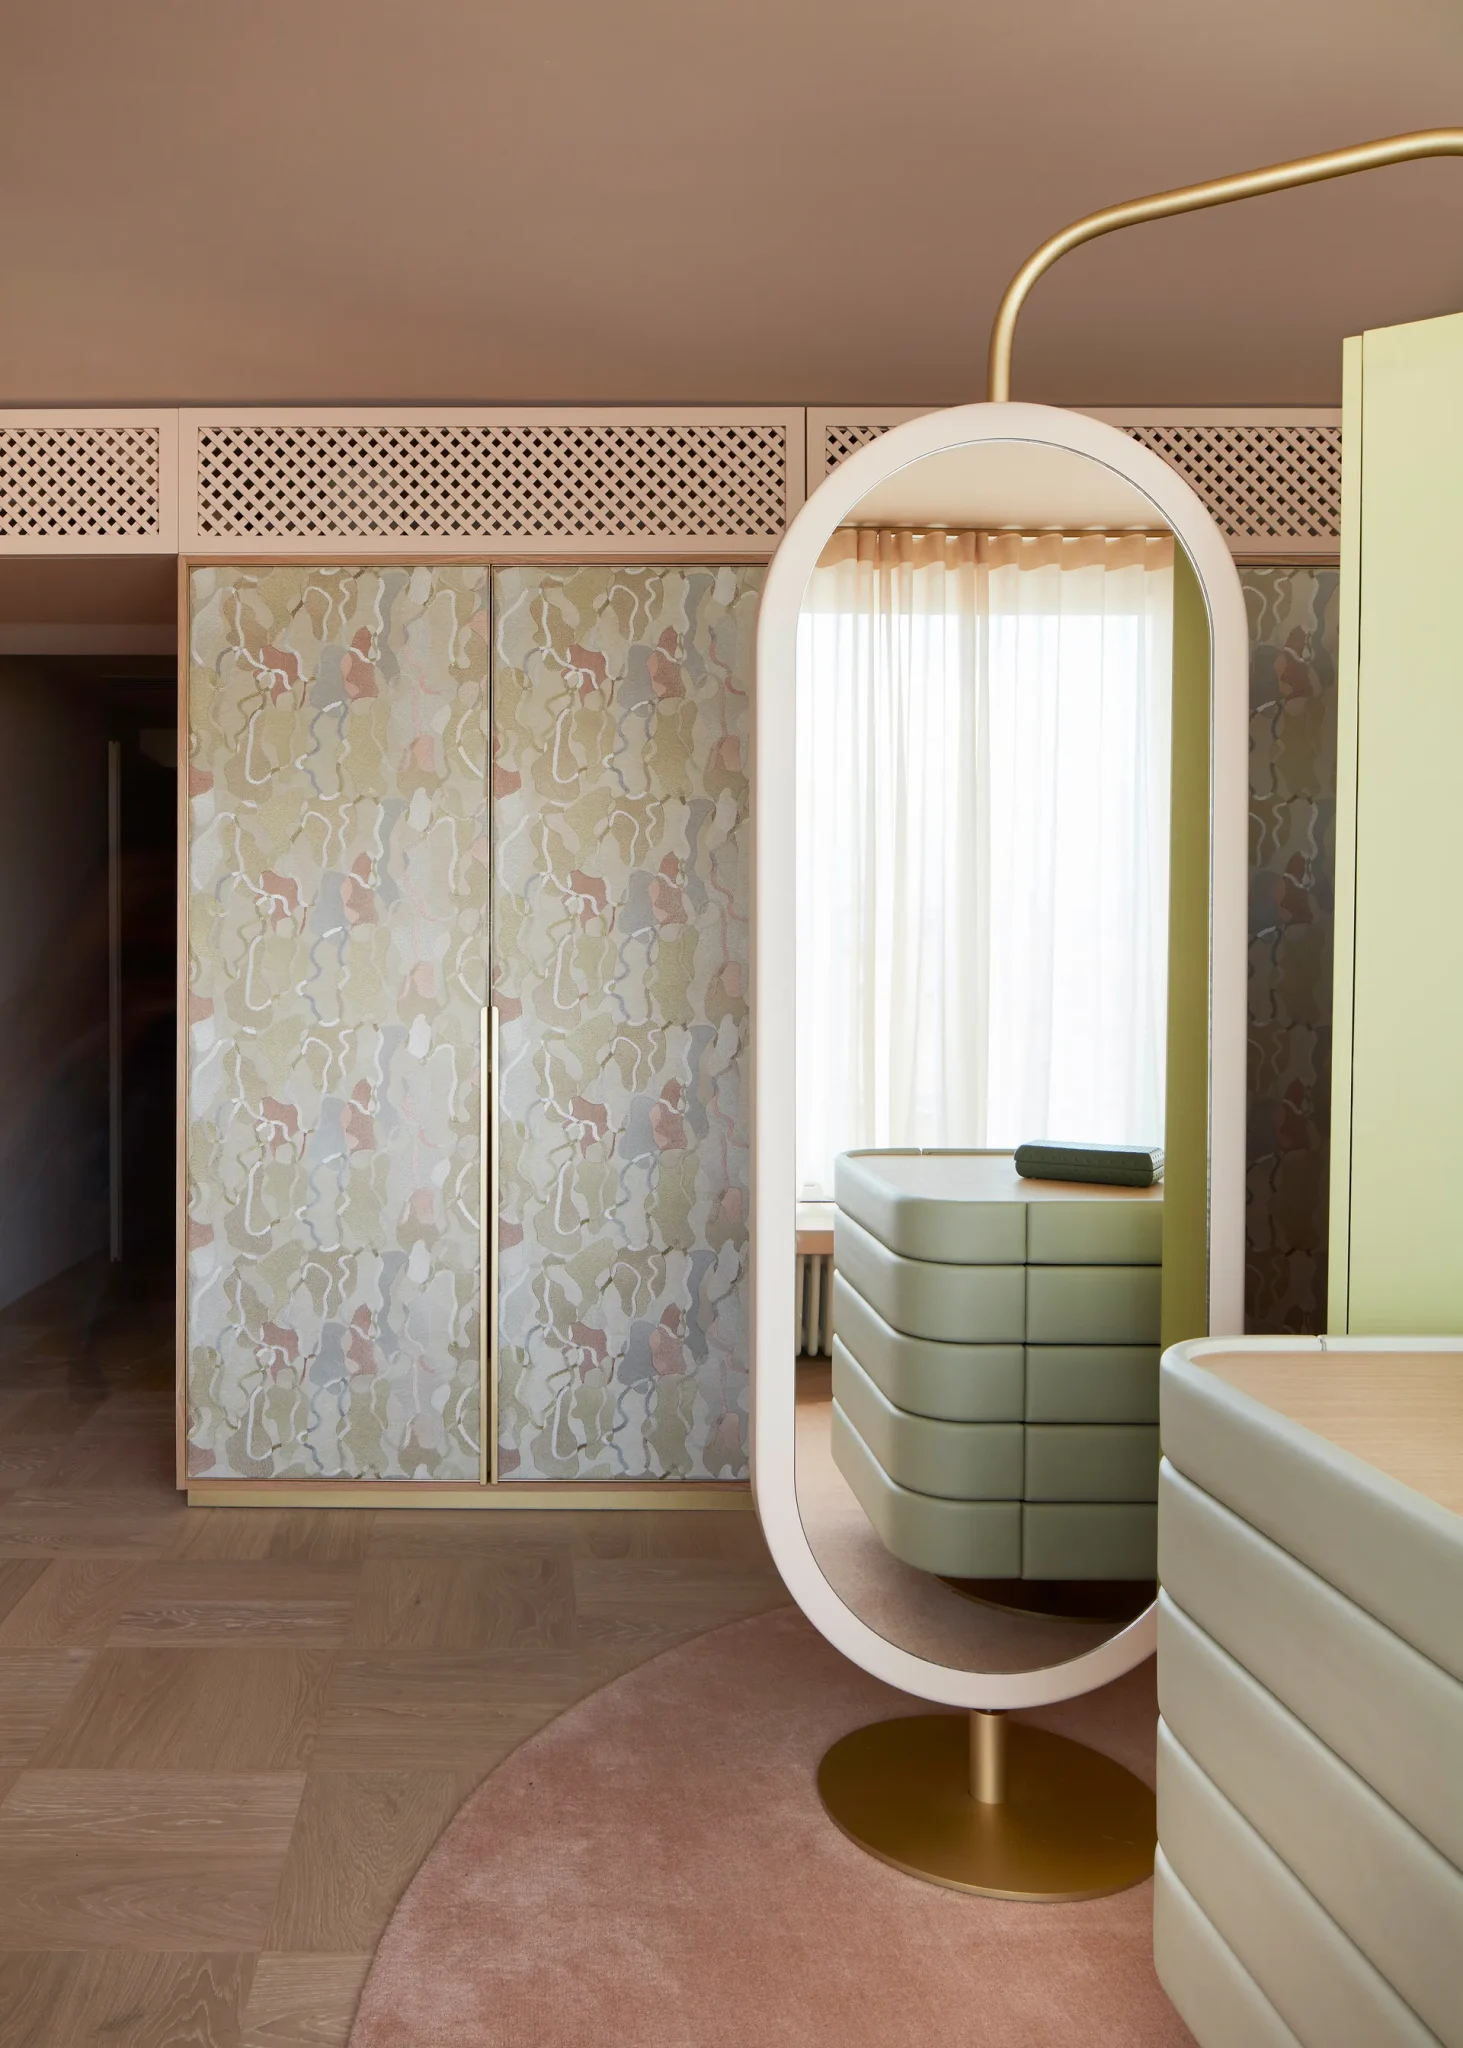 cristina celestino design in the italian penthouse